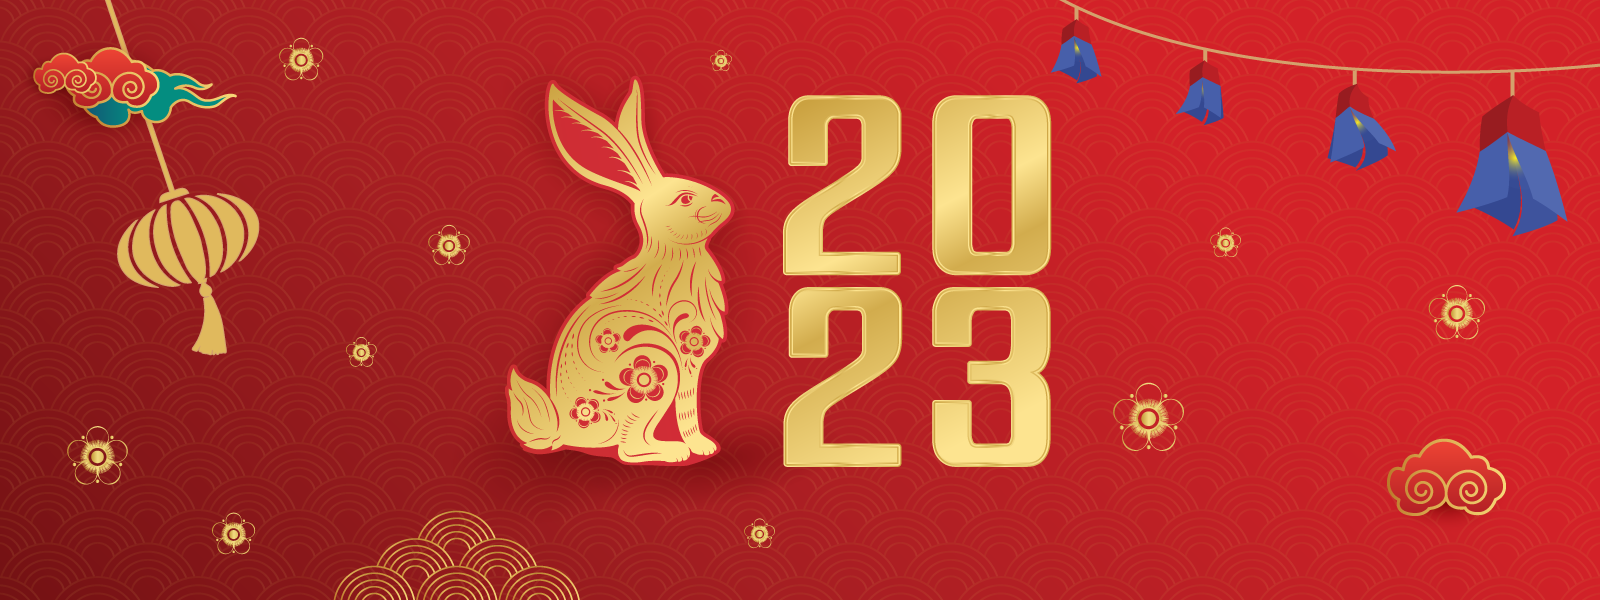 Lunar New Year 2023 Image